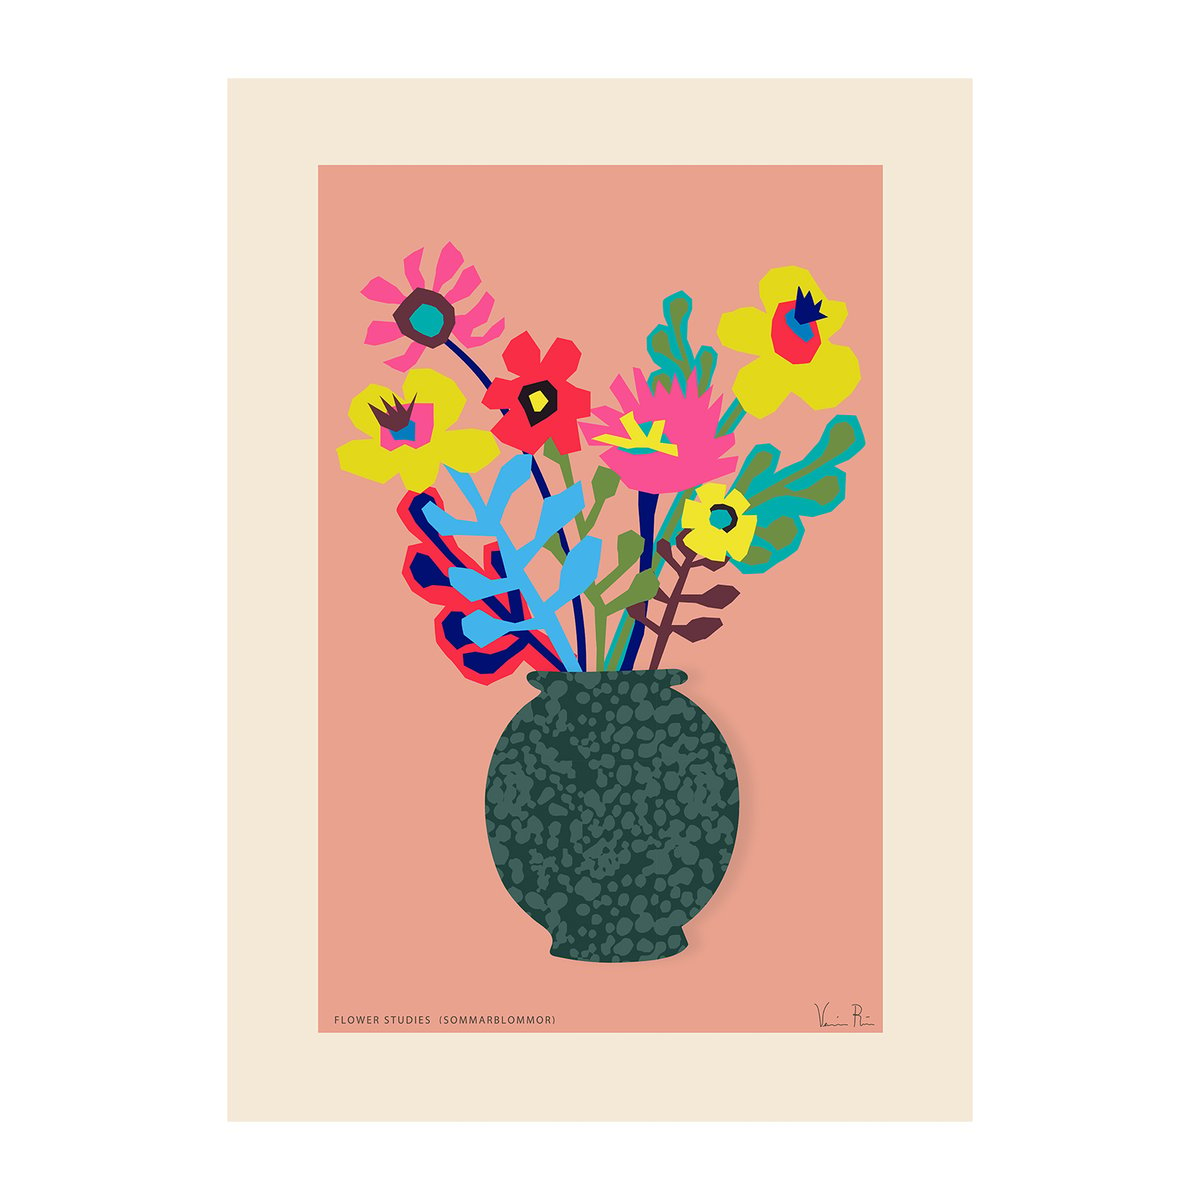 Paper Collective Flower Studies 02 (Sommer) plakat 30×40 cm